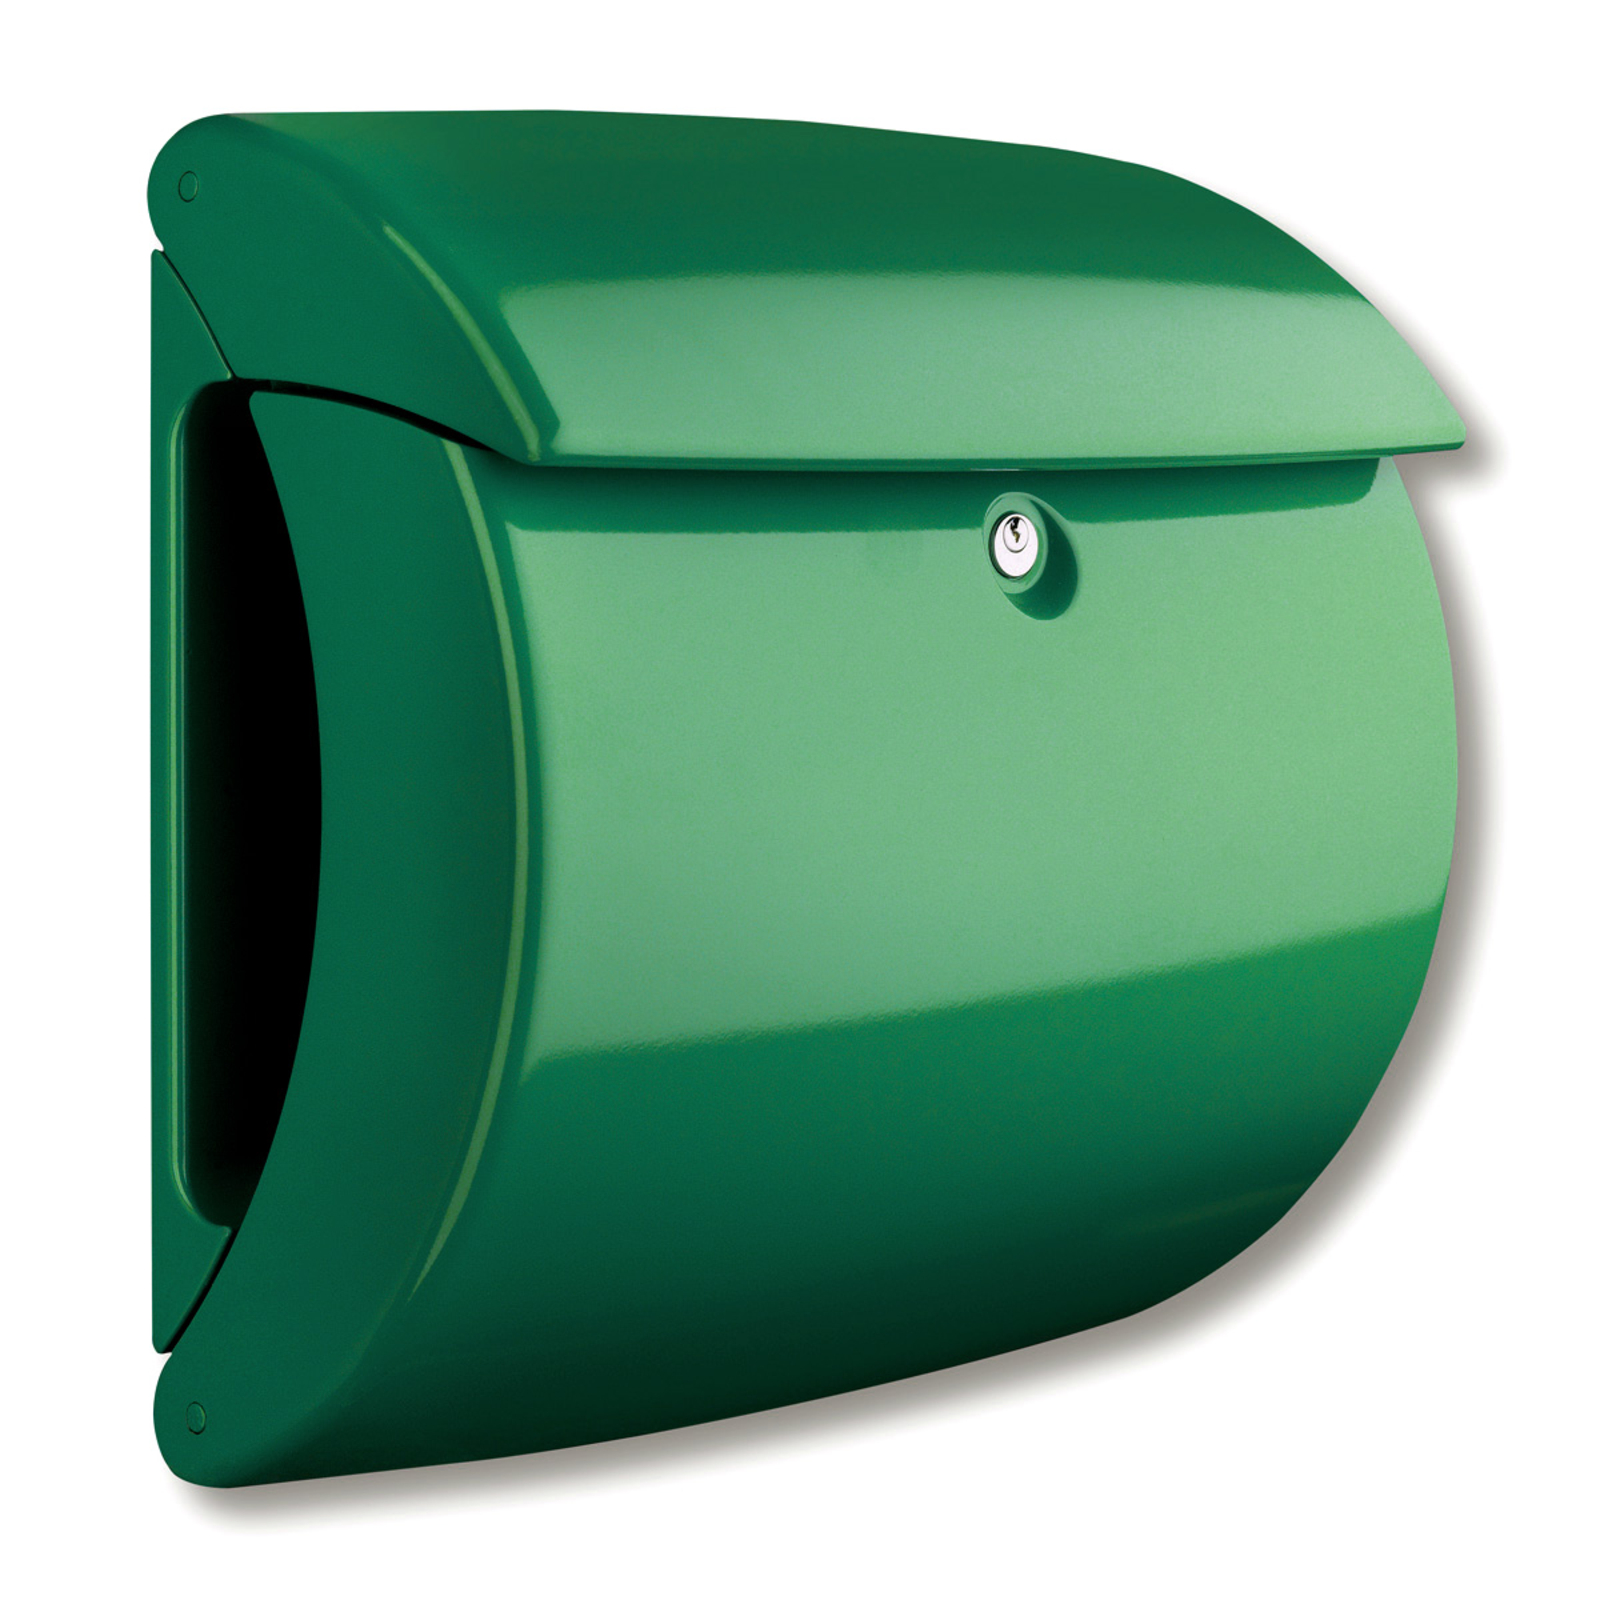 Briefkasten Kiel aus Kunststoff, grün